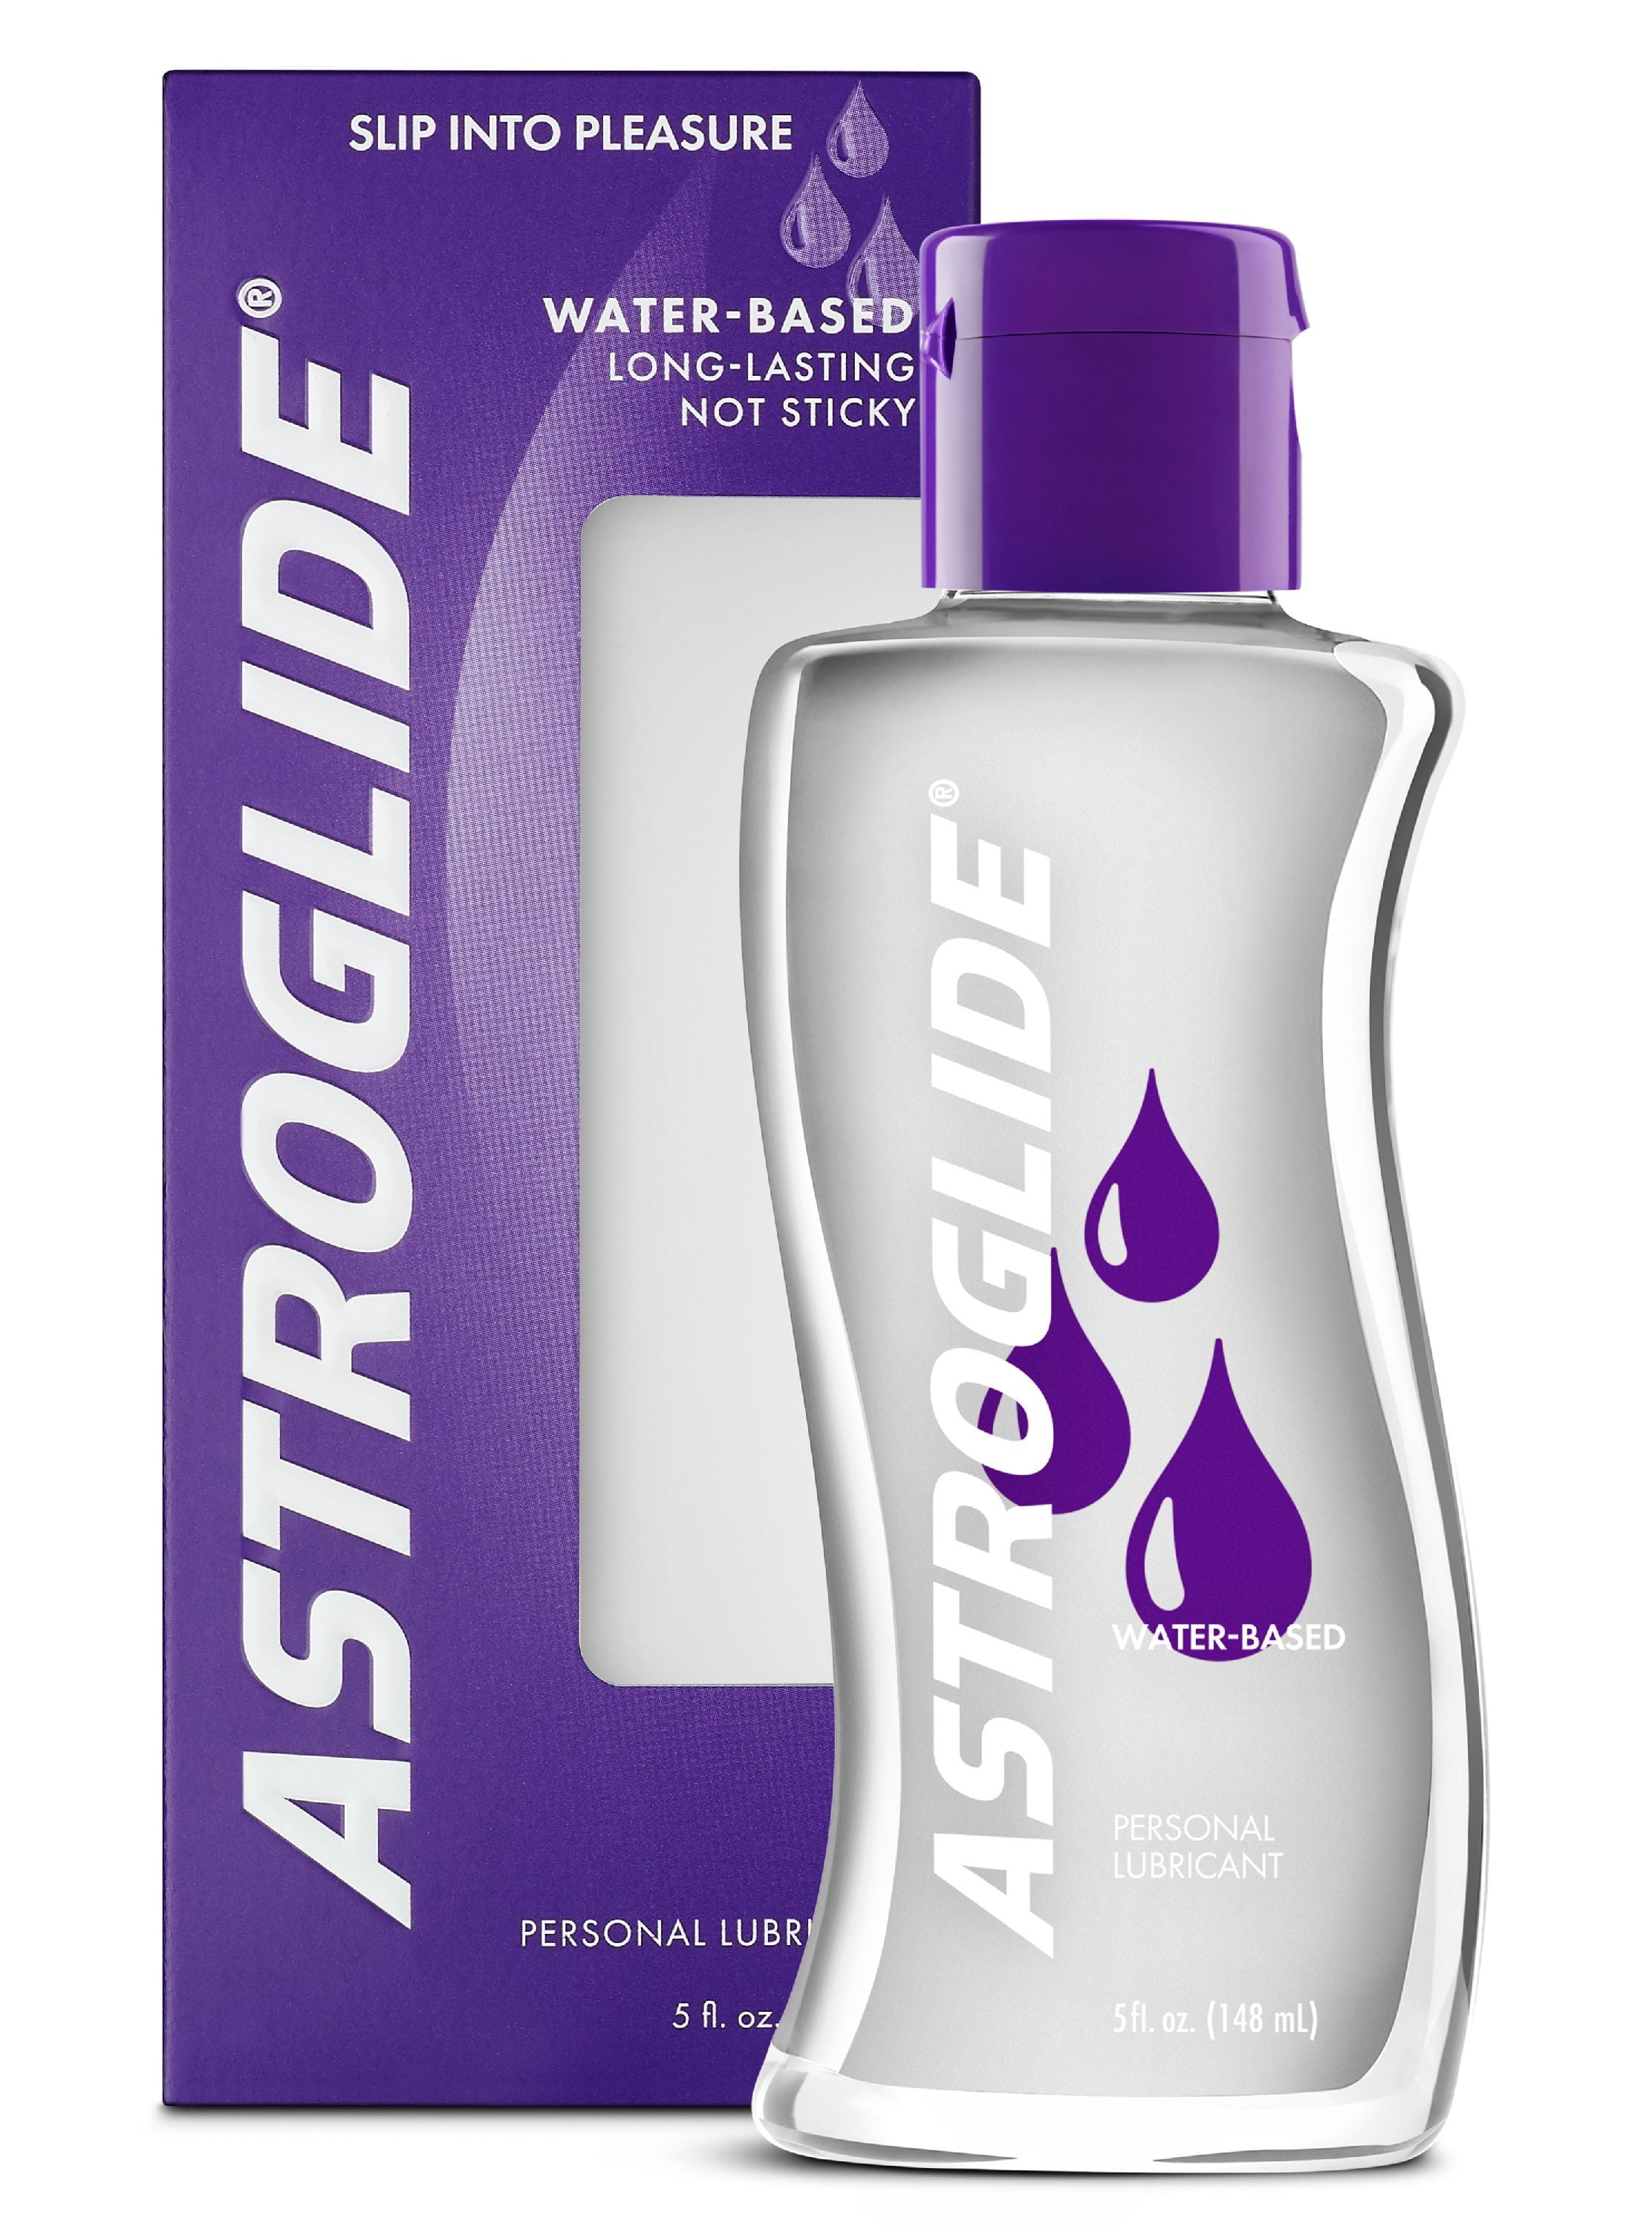 Astroglide Liquid, Water Based Personal Lubricant, 5 oz